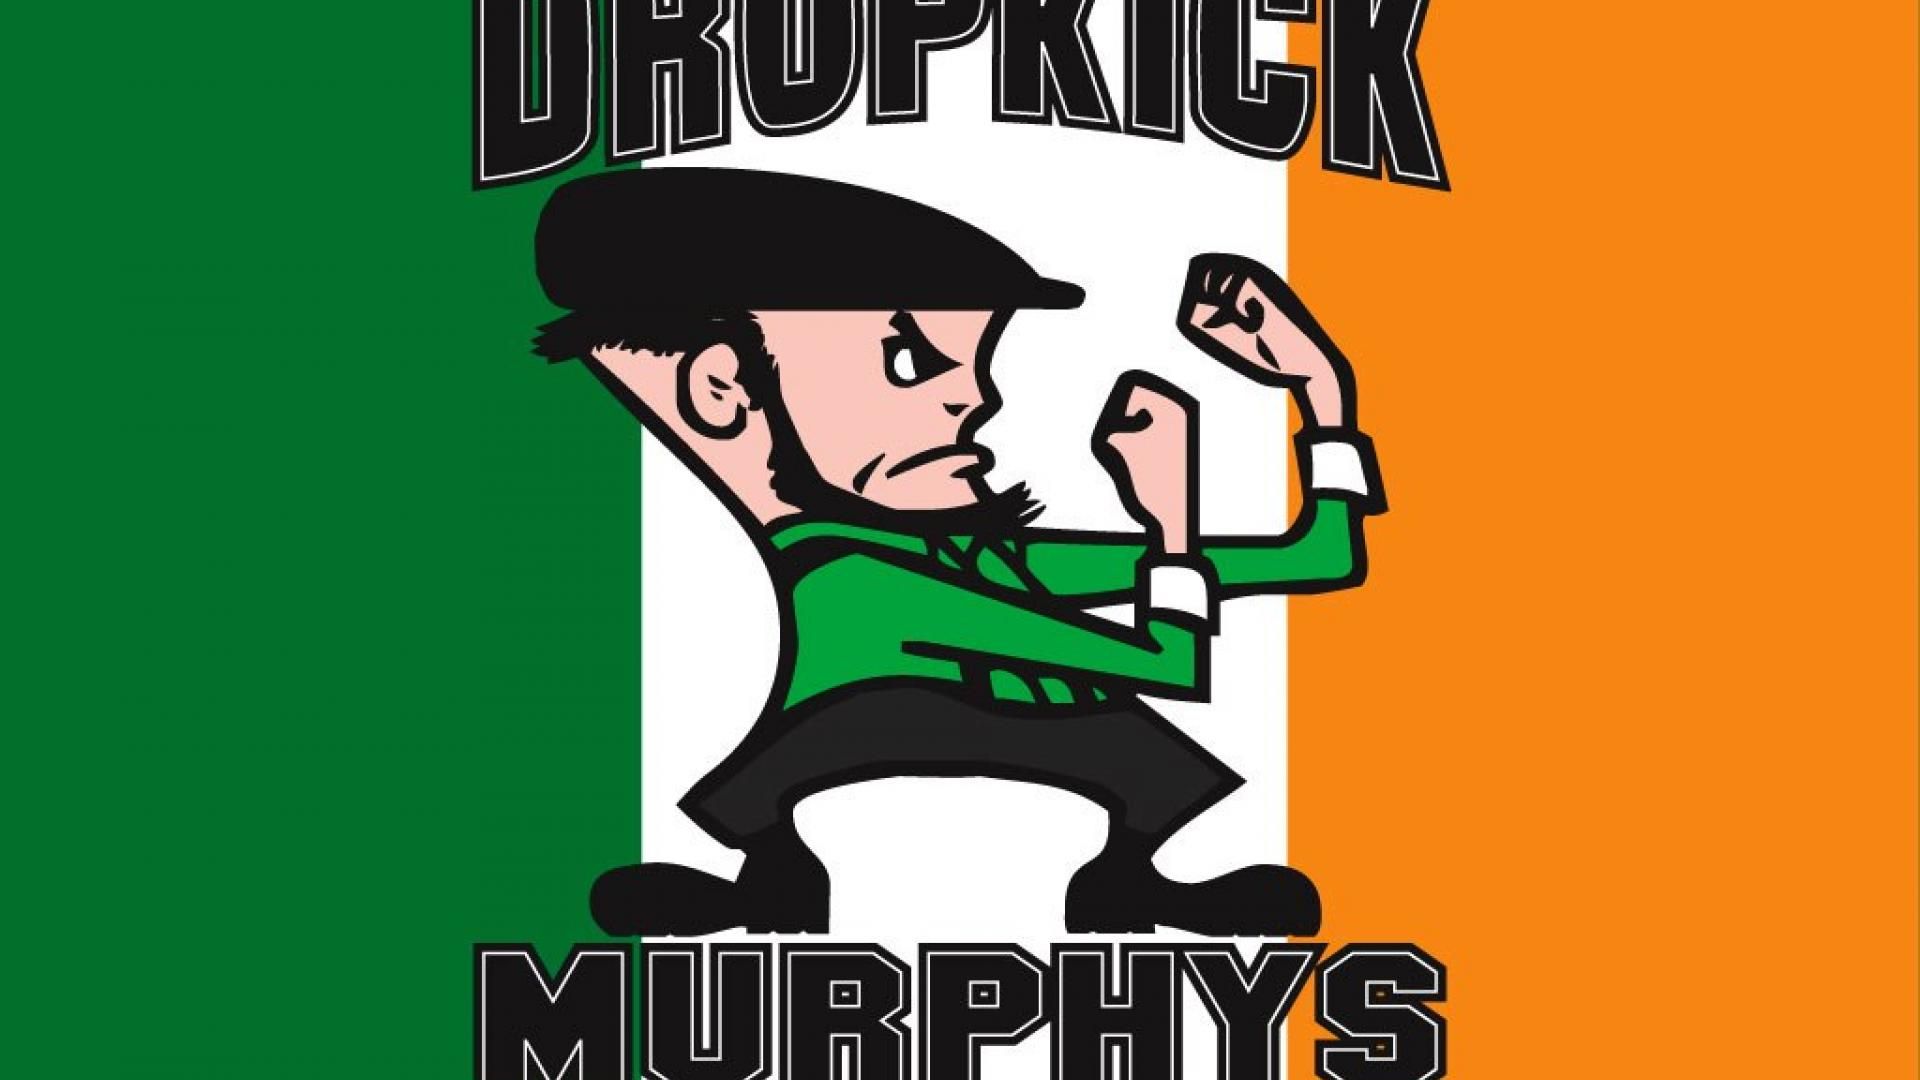 dropkick murphys official hd wallpaper - (#4771) - HQ Desktop ...